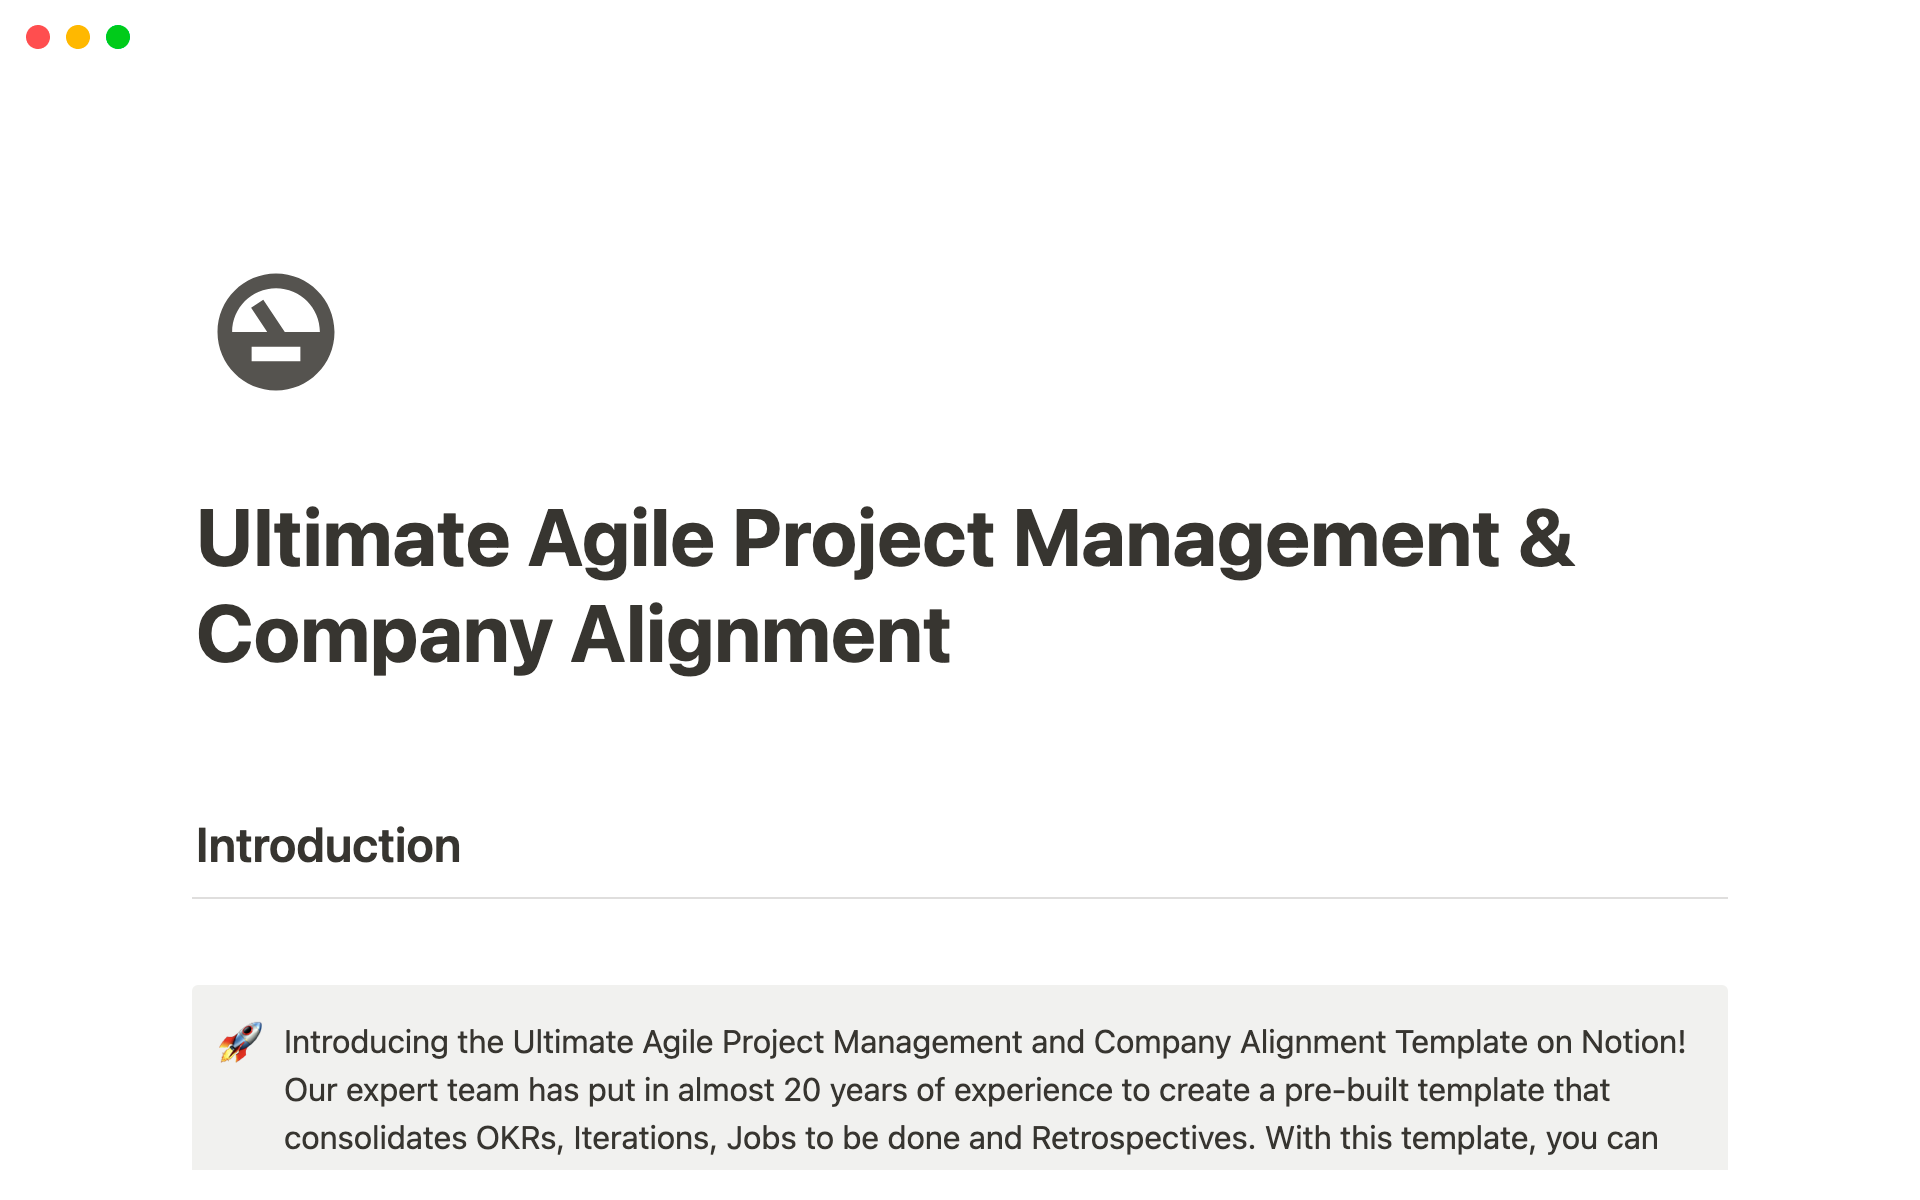 The Ultimate Agile Project Management Template님의 템플릿 미리보기